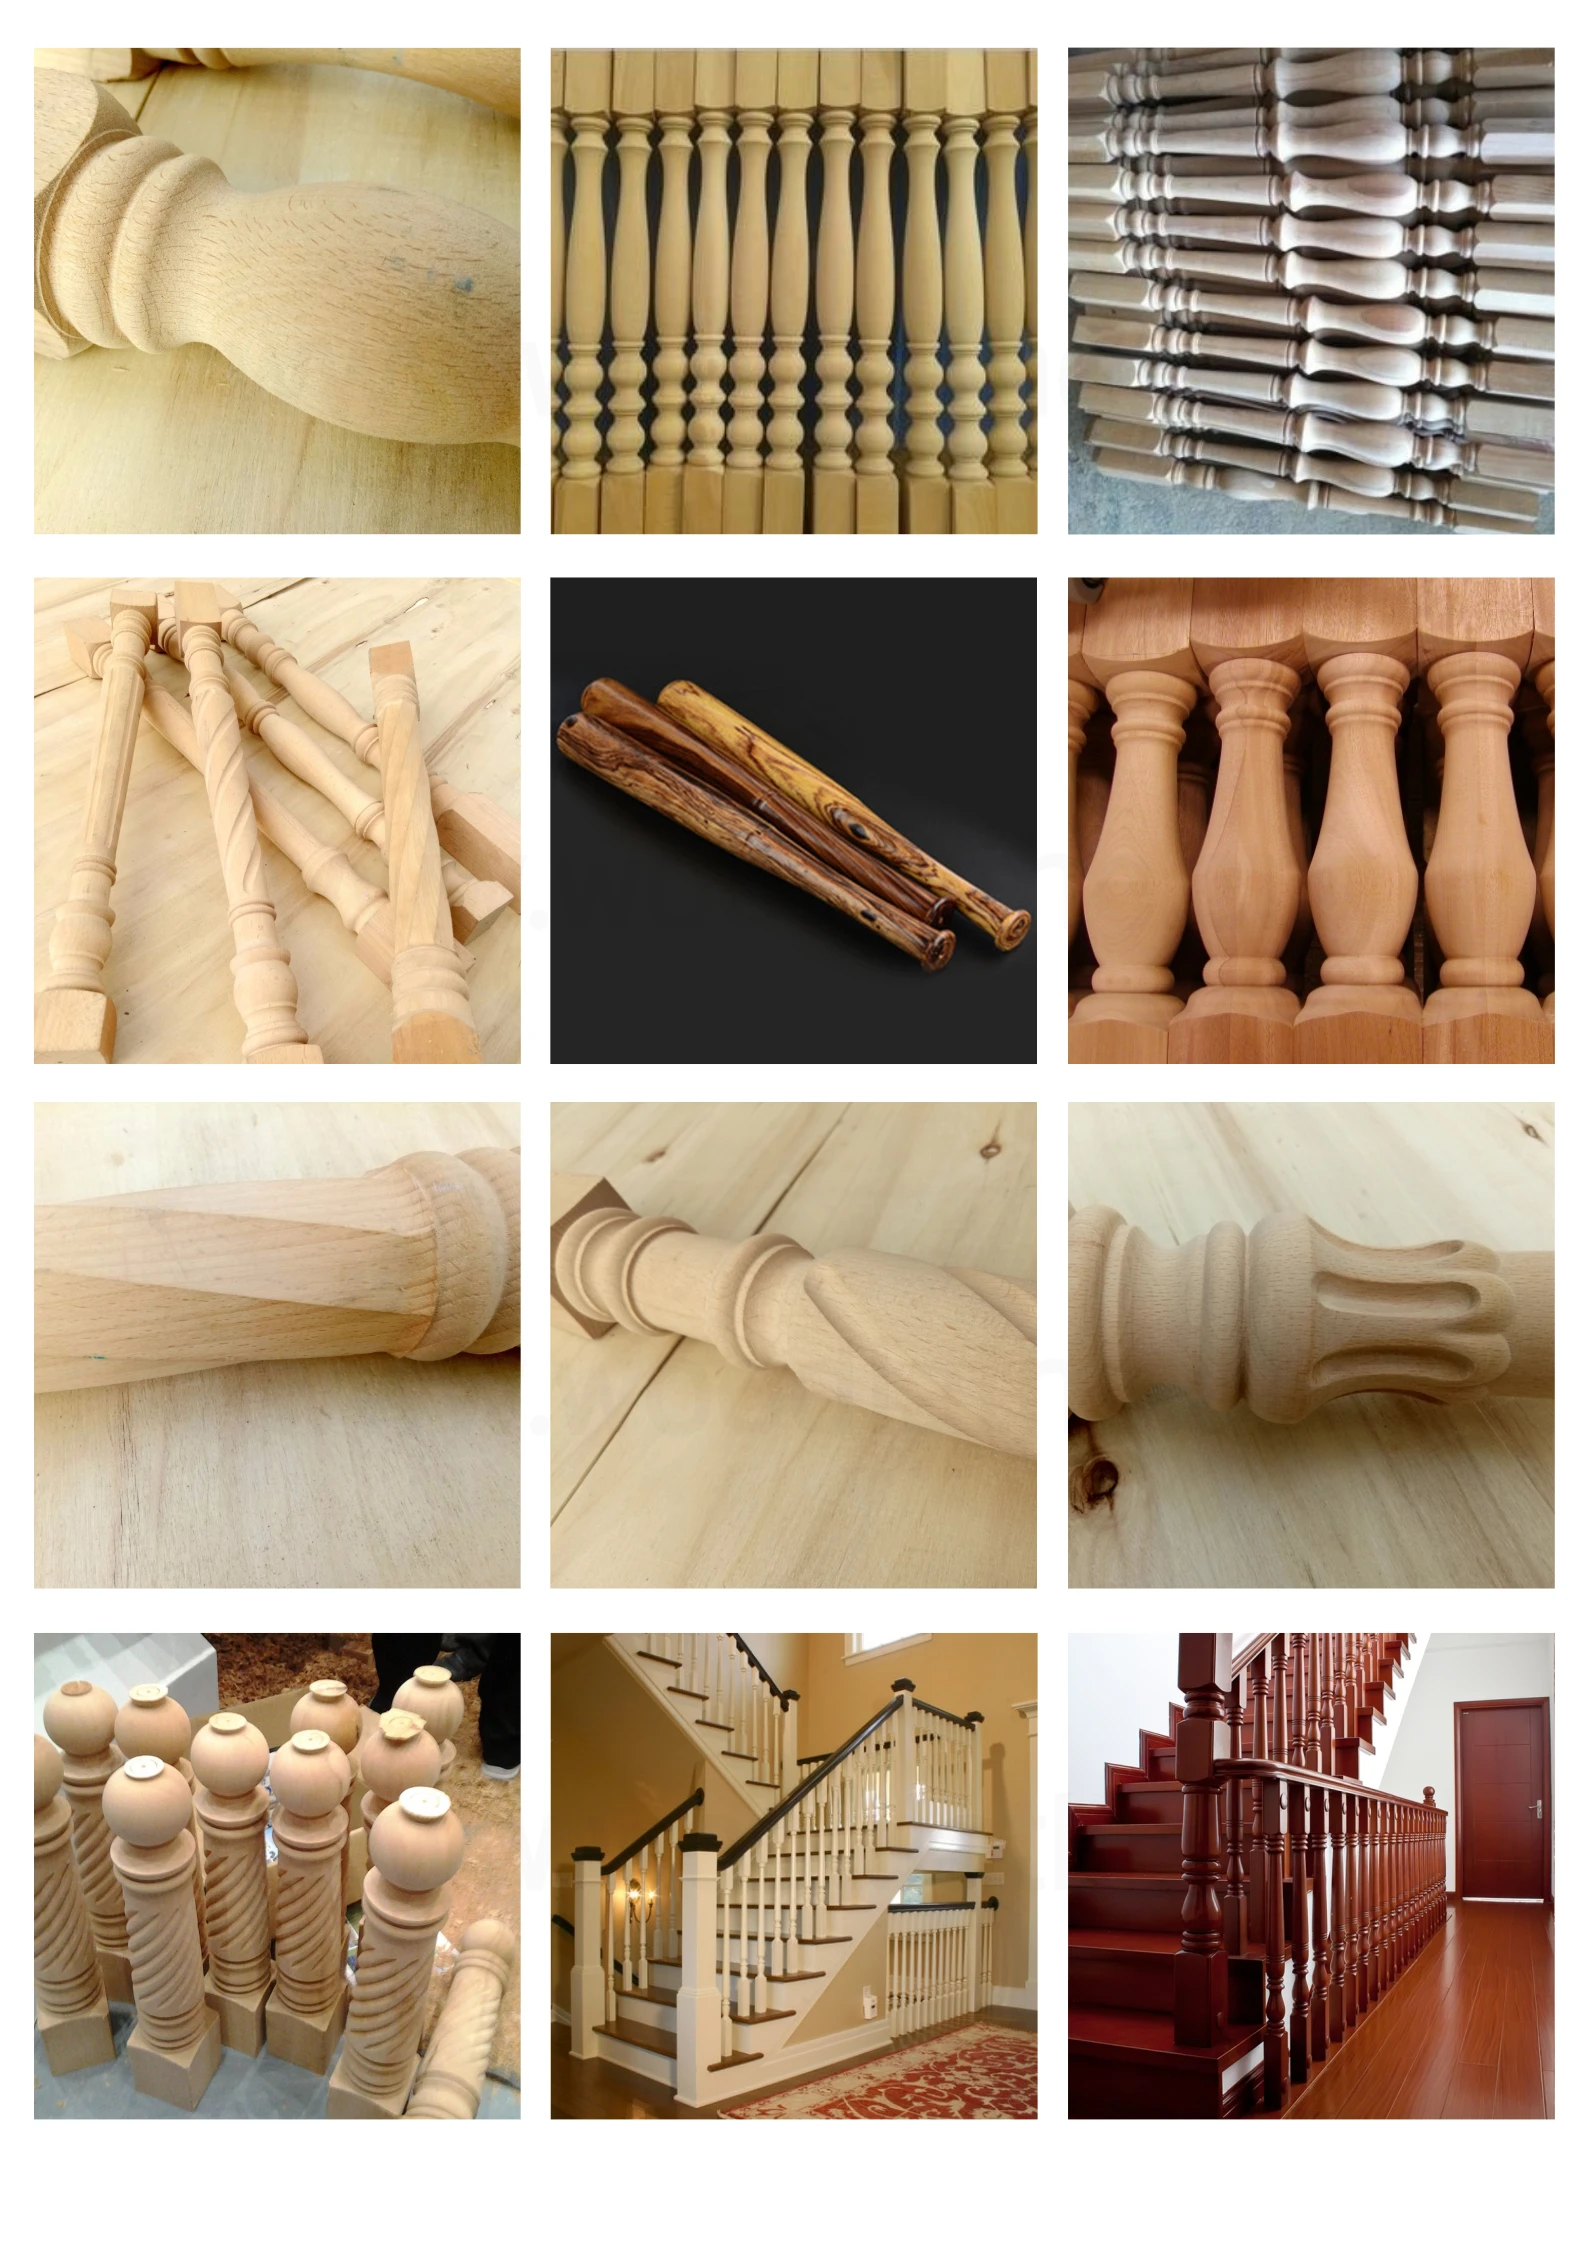 cnc wood lathe samples details